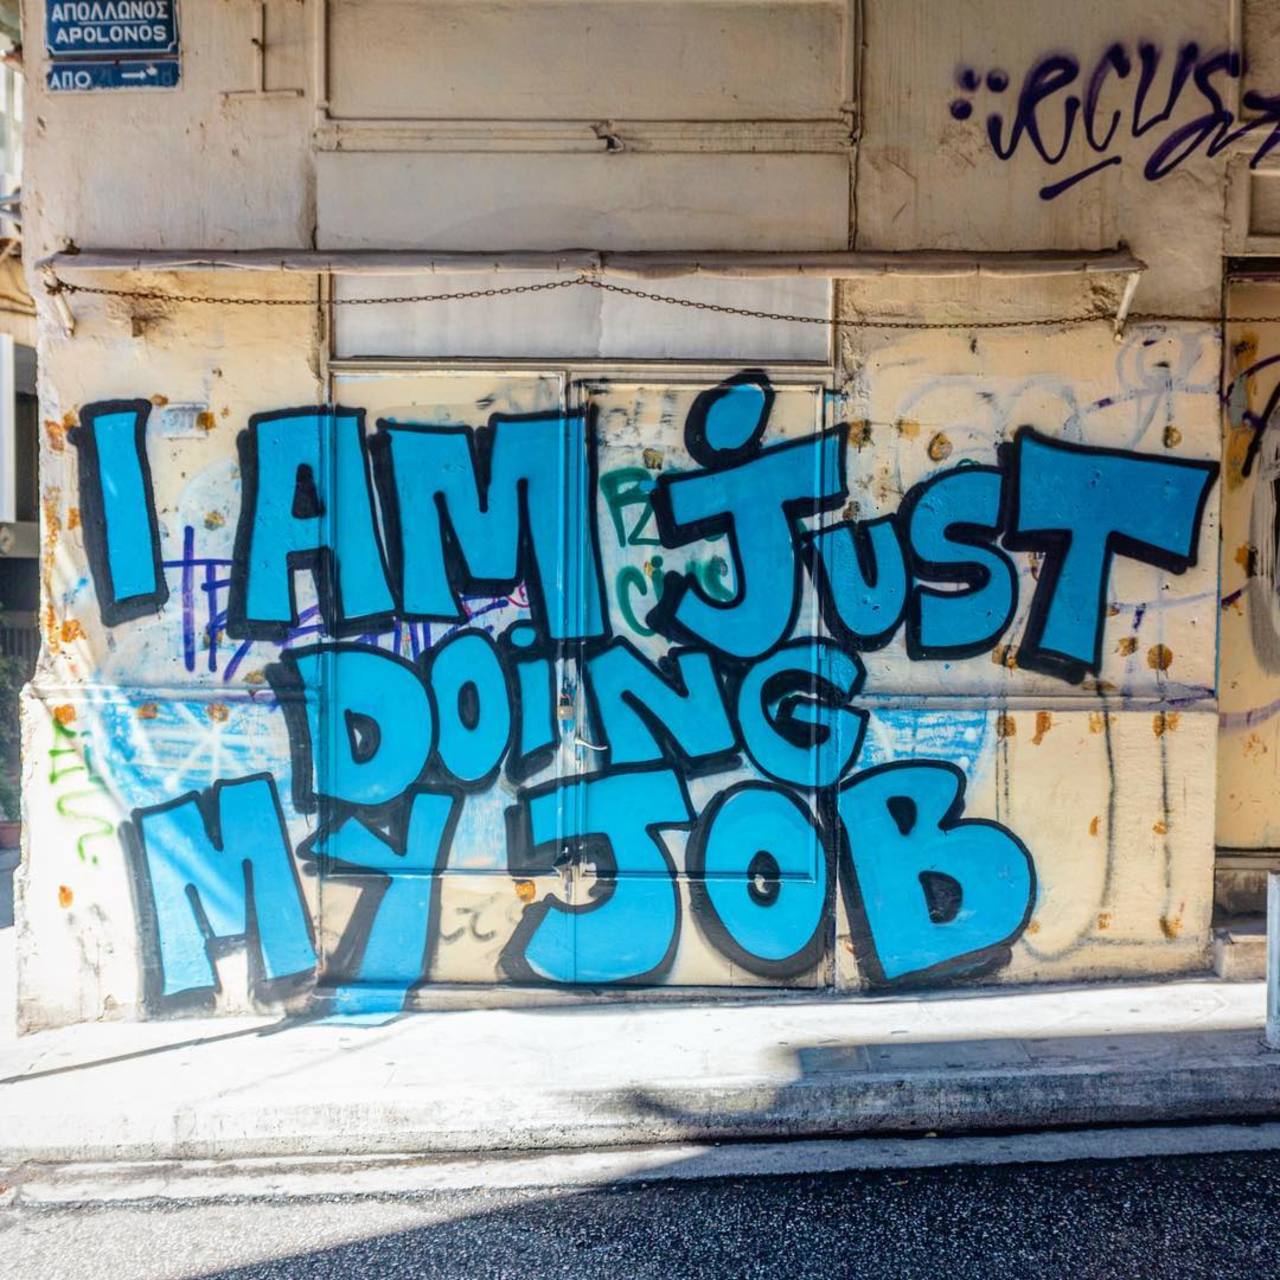 When someone asks you why you #smoke so much. Photo: goodguyboris. #job #streetart #graffiti https://t.co/t5GjTK6uqv